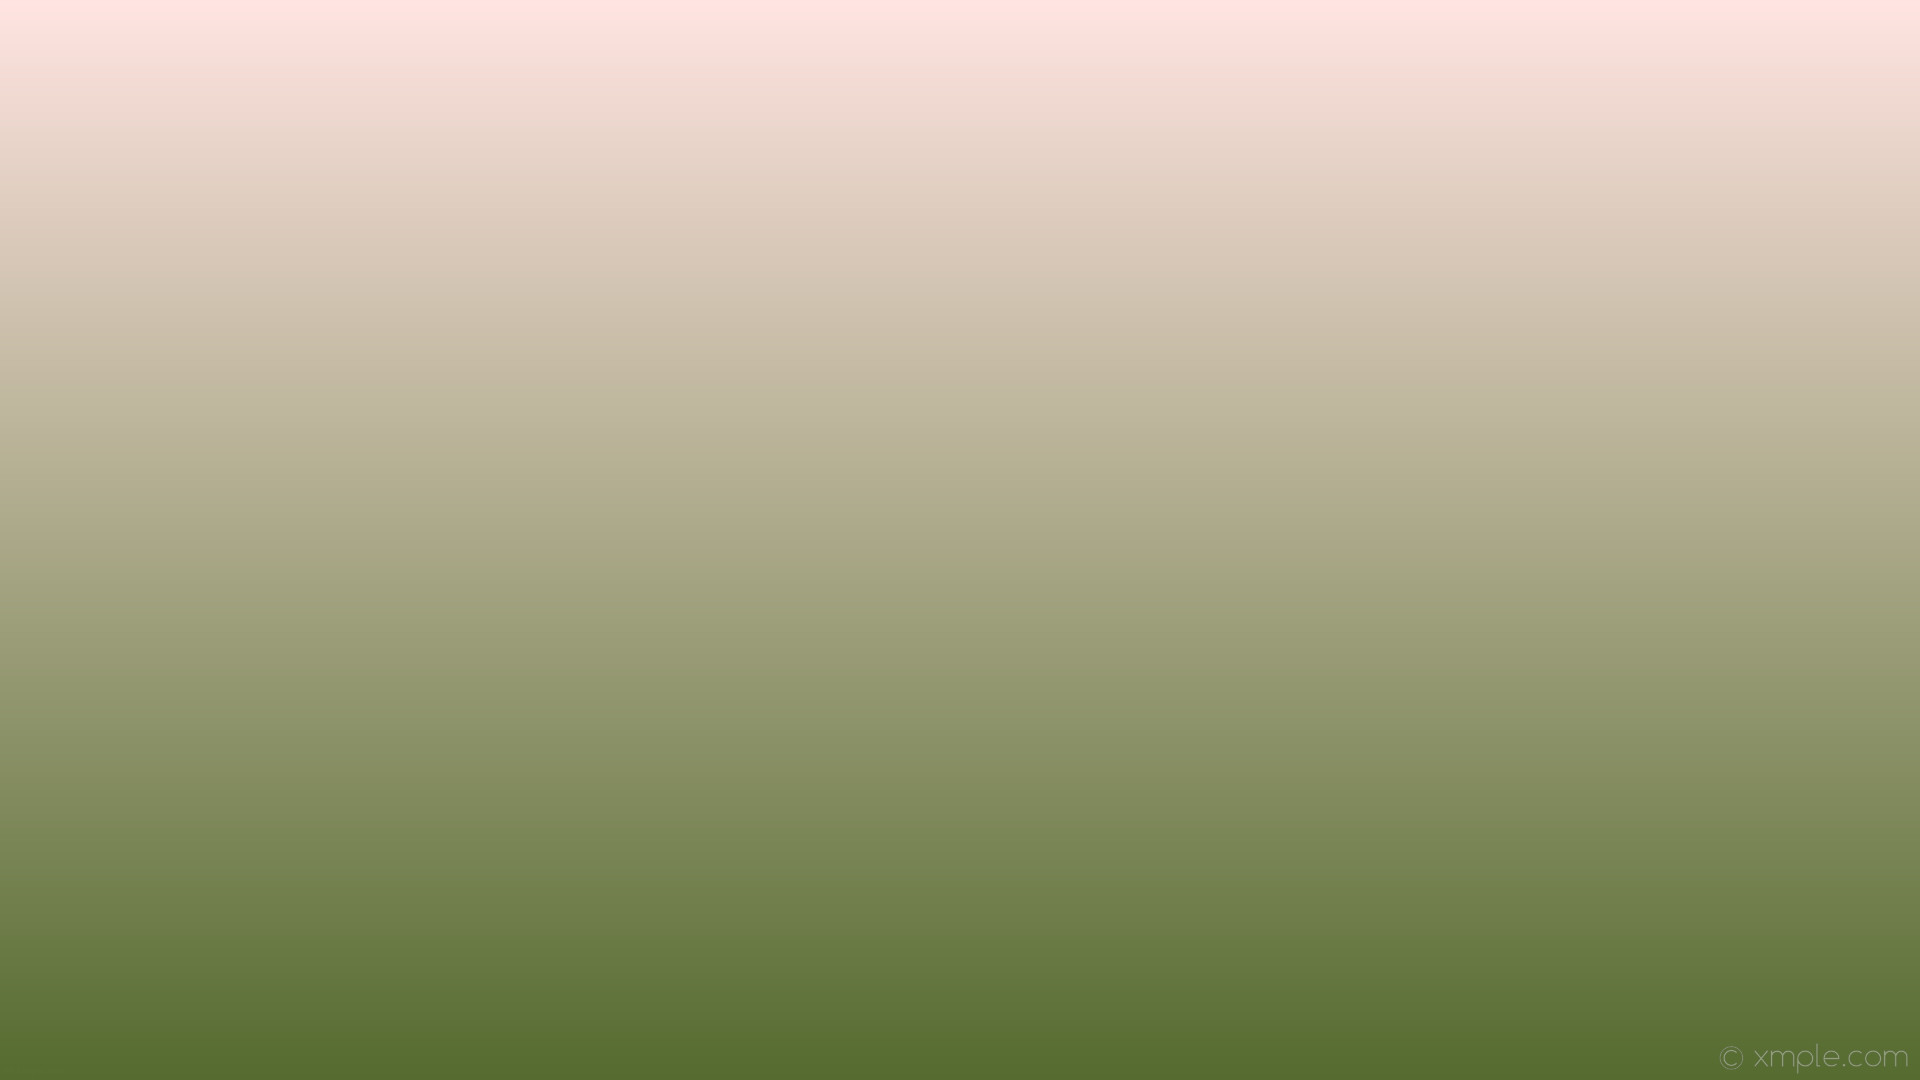 1920x1080 wallpaper gradient green linear white misty rose dark olive green #ffe4e1  #556b2f 90Â°